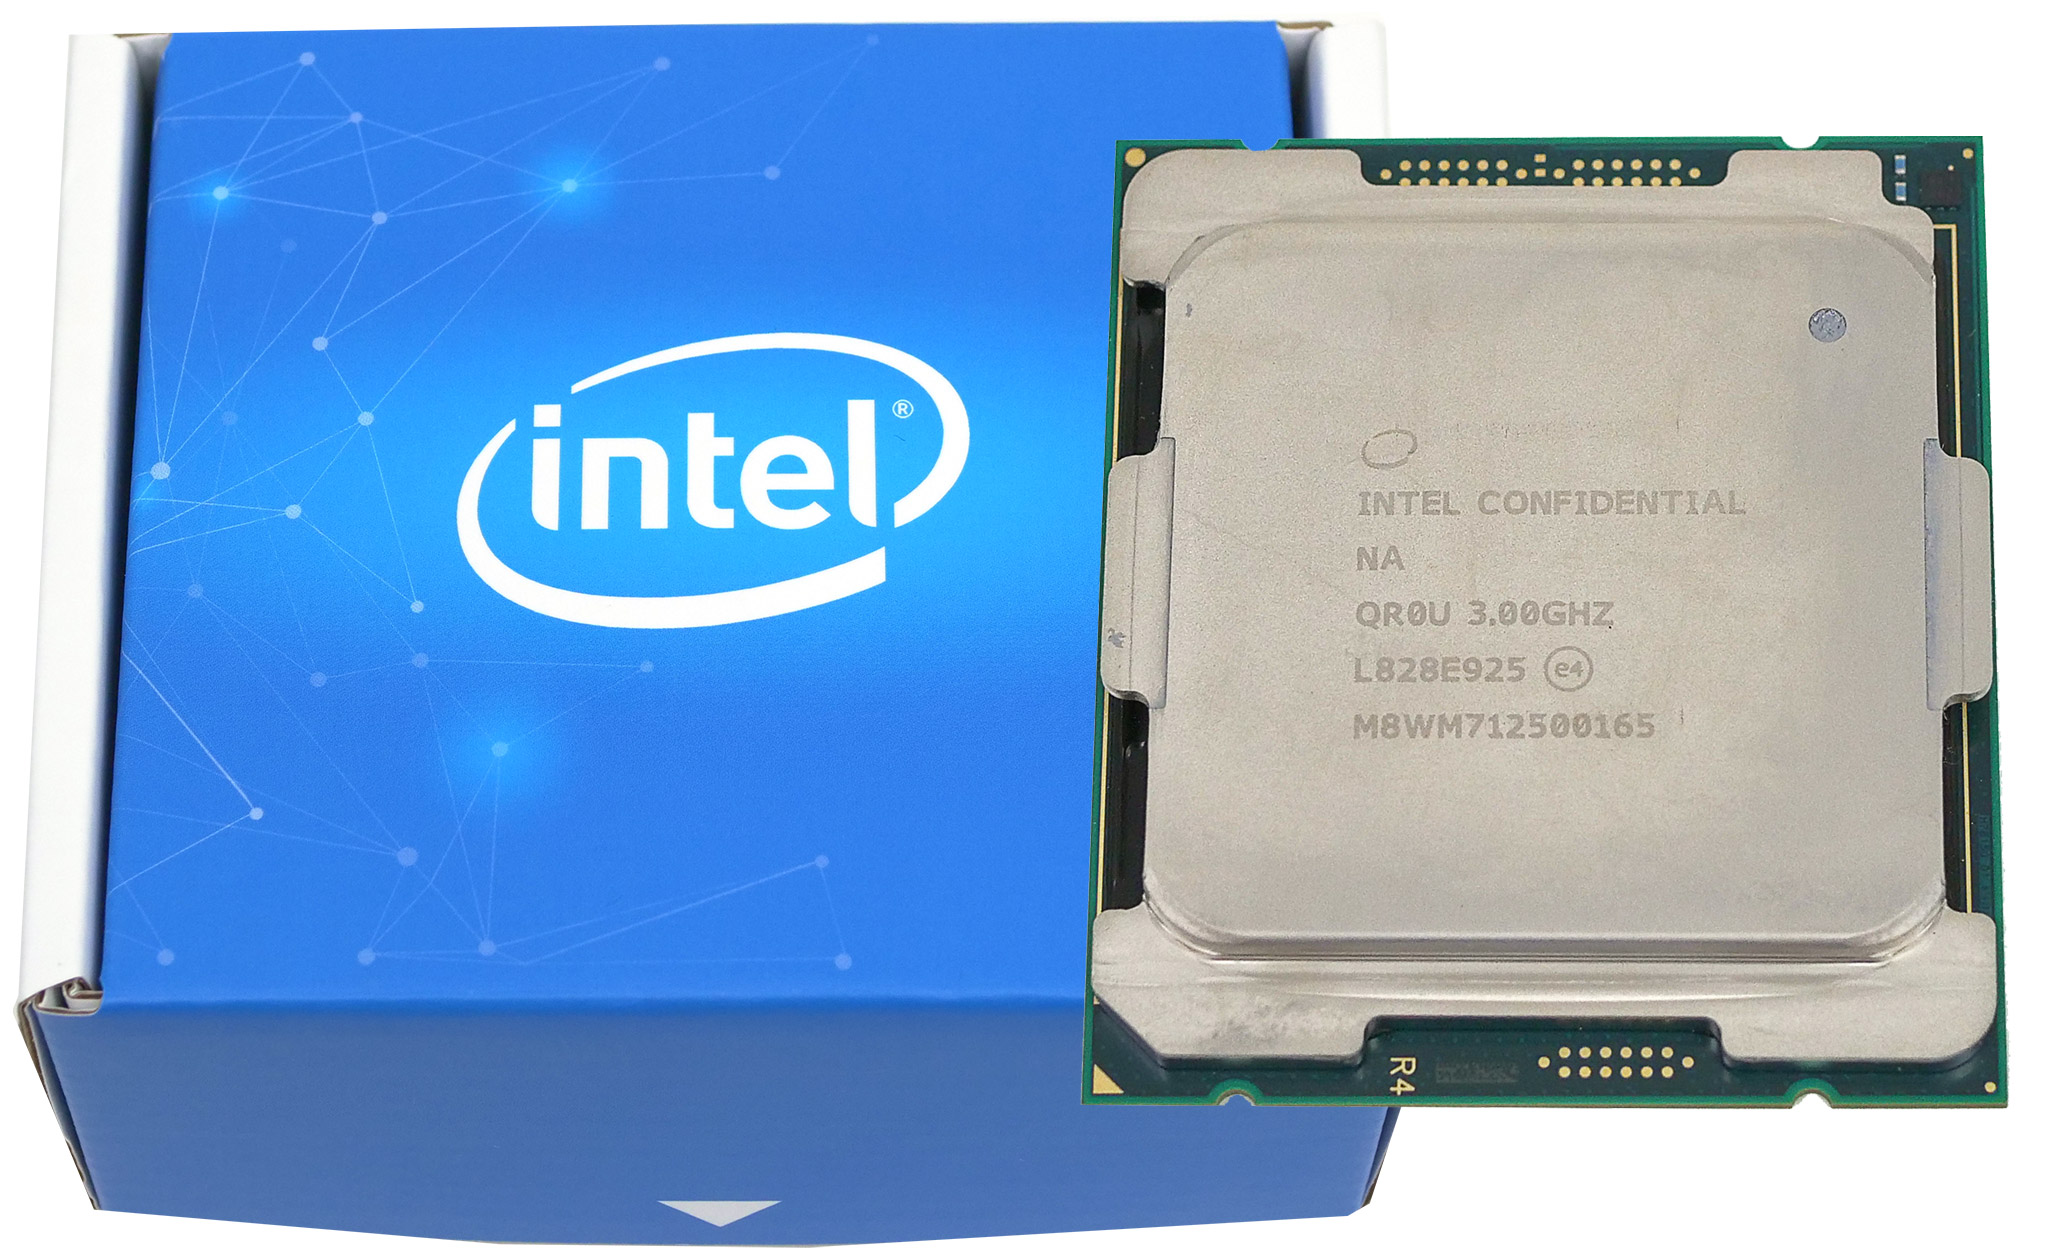 Intel Core i9-9980XE Extreme Edition Processor Review - Legit Reviews